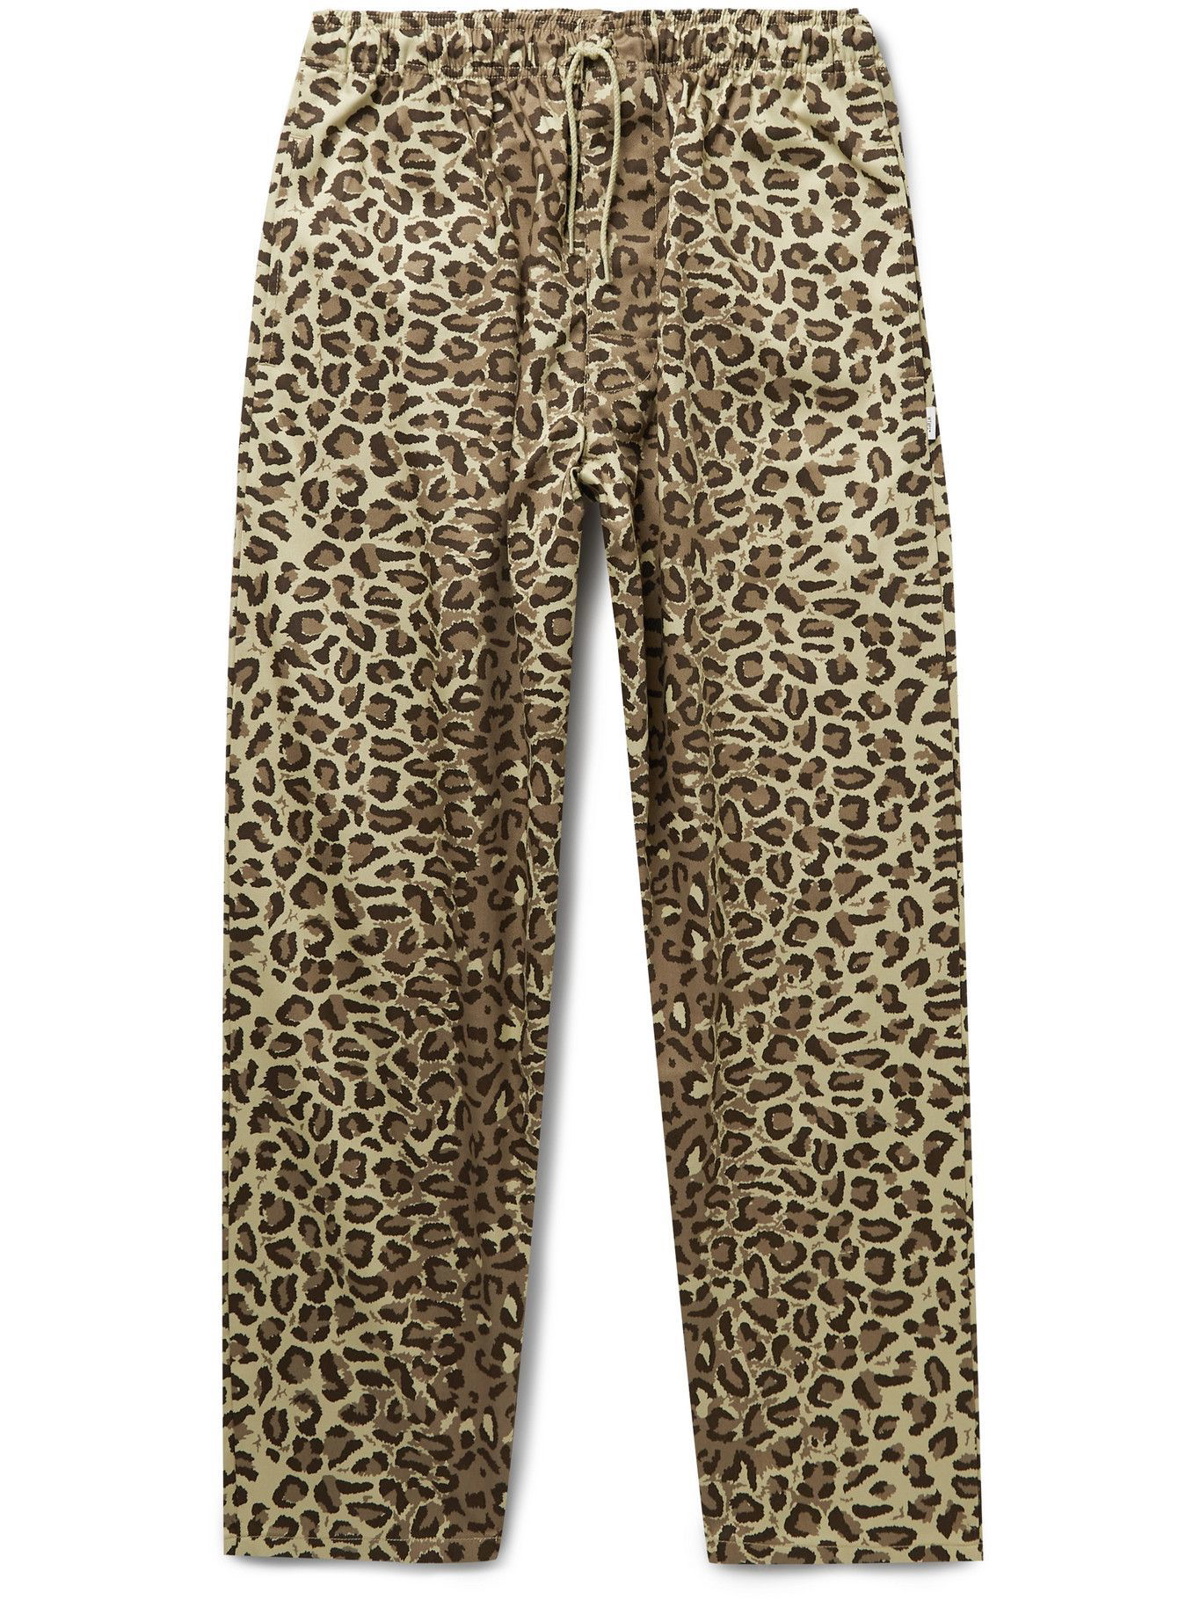 WTAPS - Seagull Leopard-Print Cotton-Twill Drawstring Trousers 